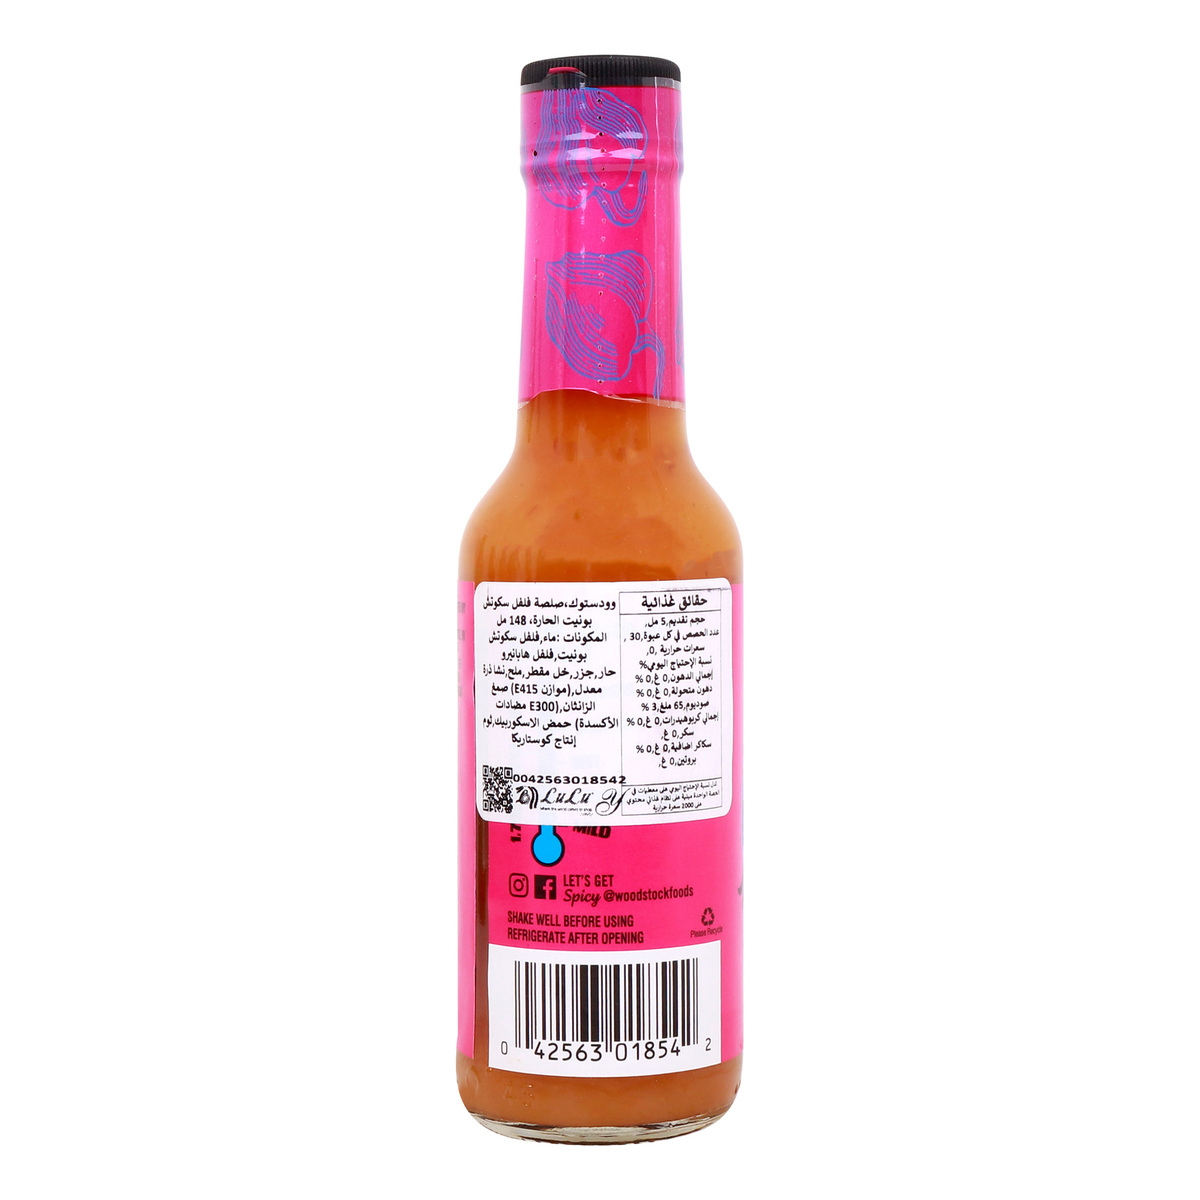 Woodstock Scotch Bonnet Hot Sauce, 5 OZ (148 ml)